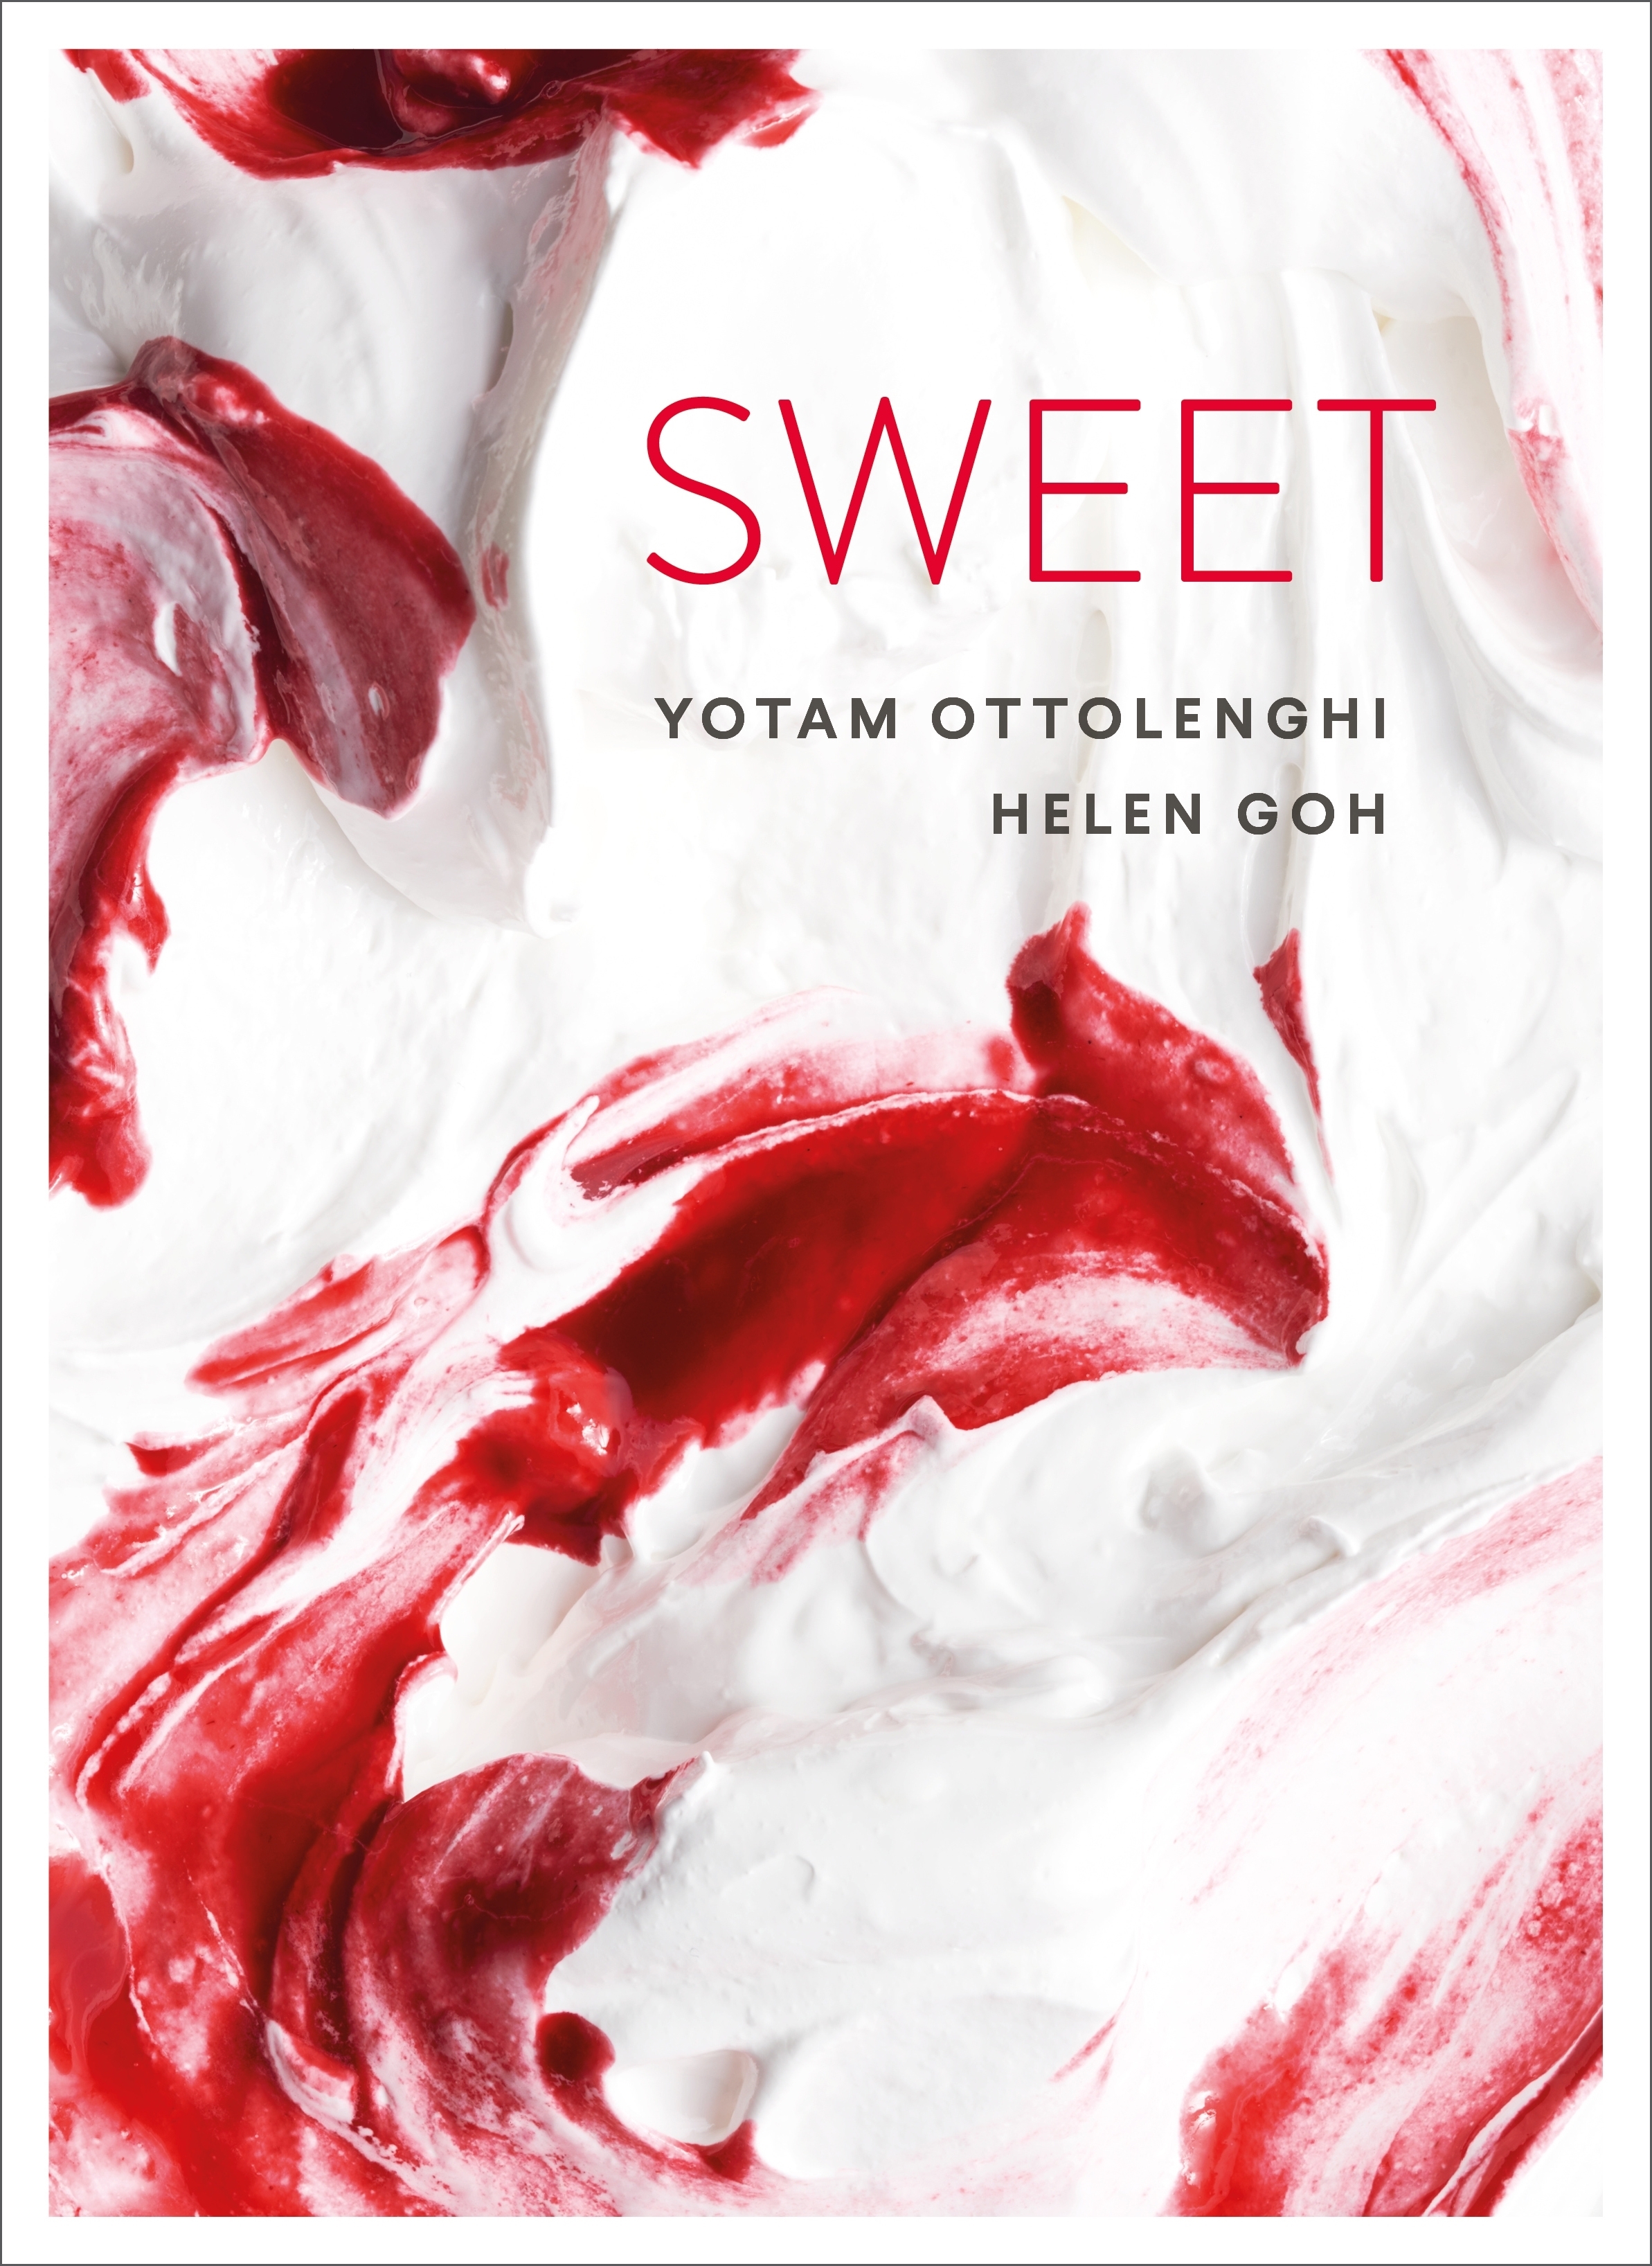 Sweet - Ottolenghi, Yotam and Goh, Helen